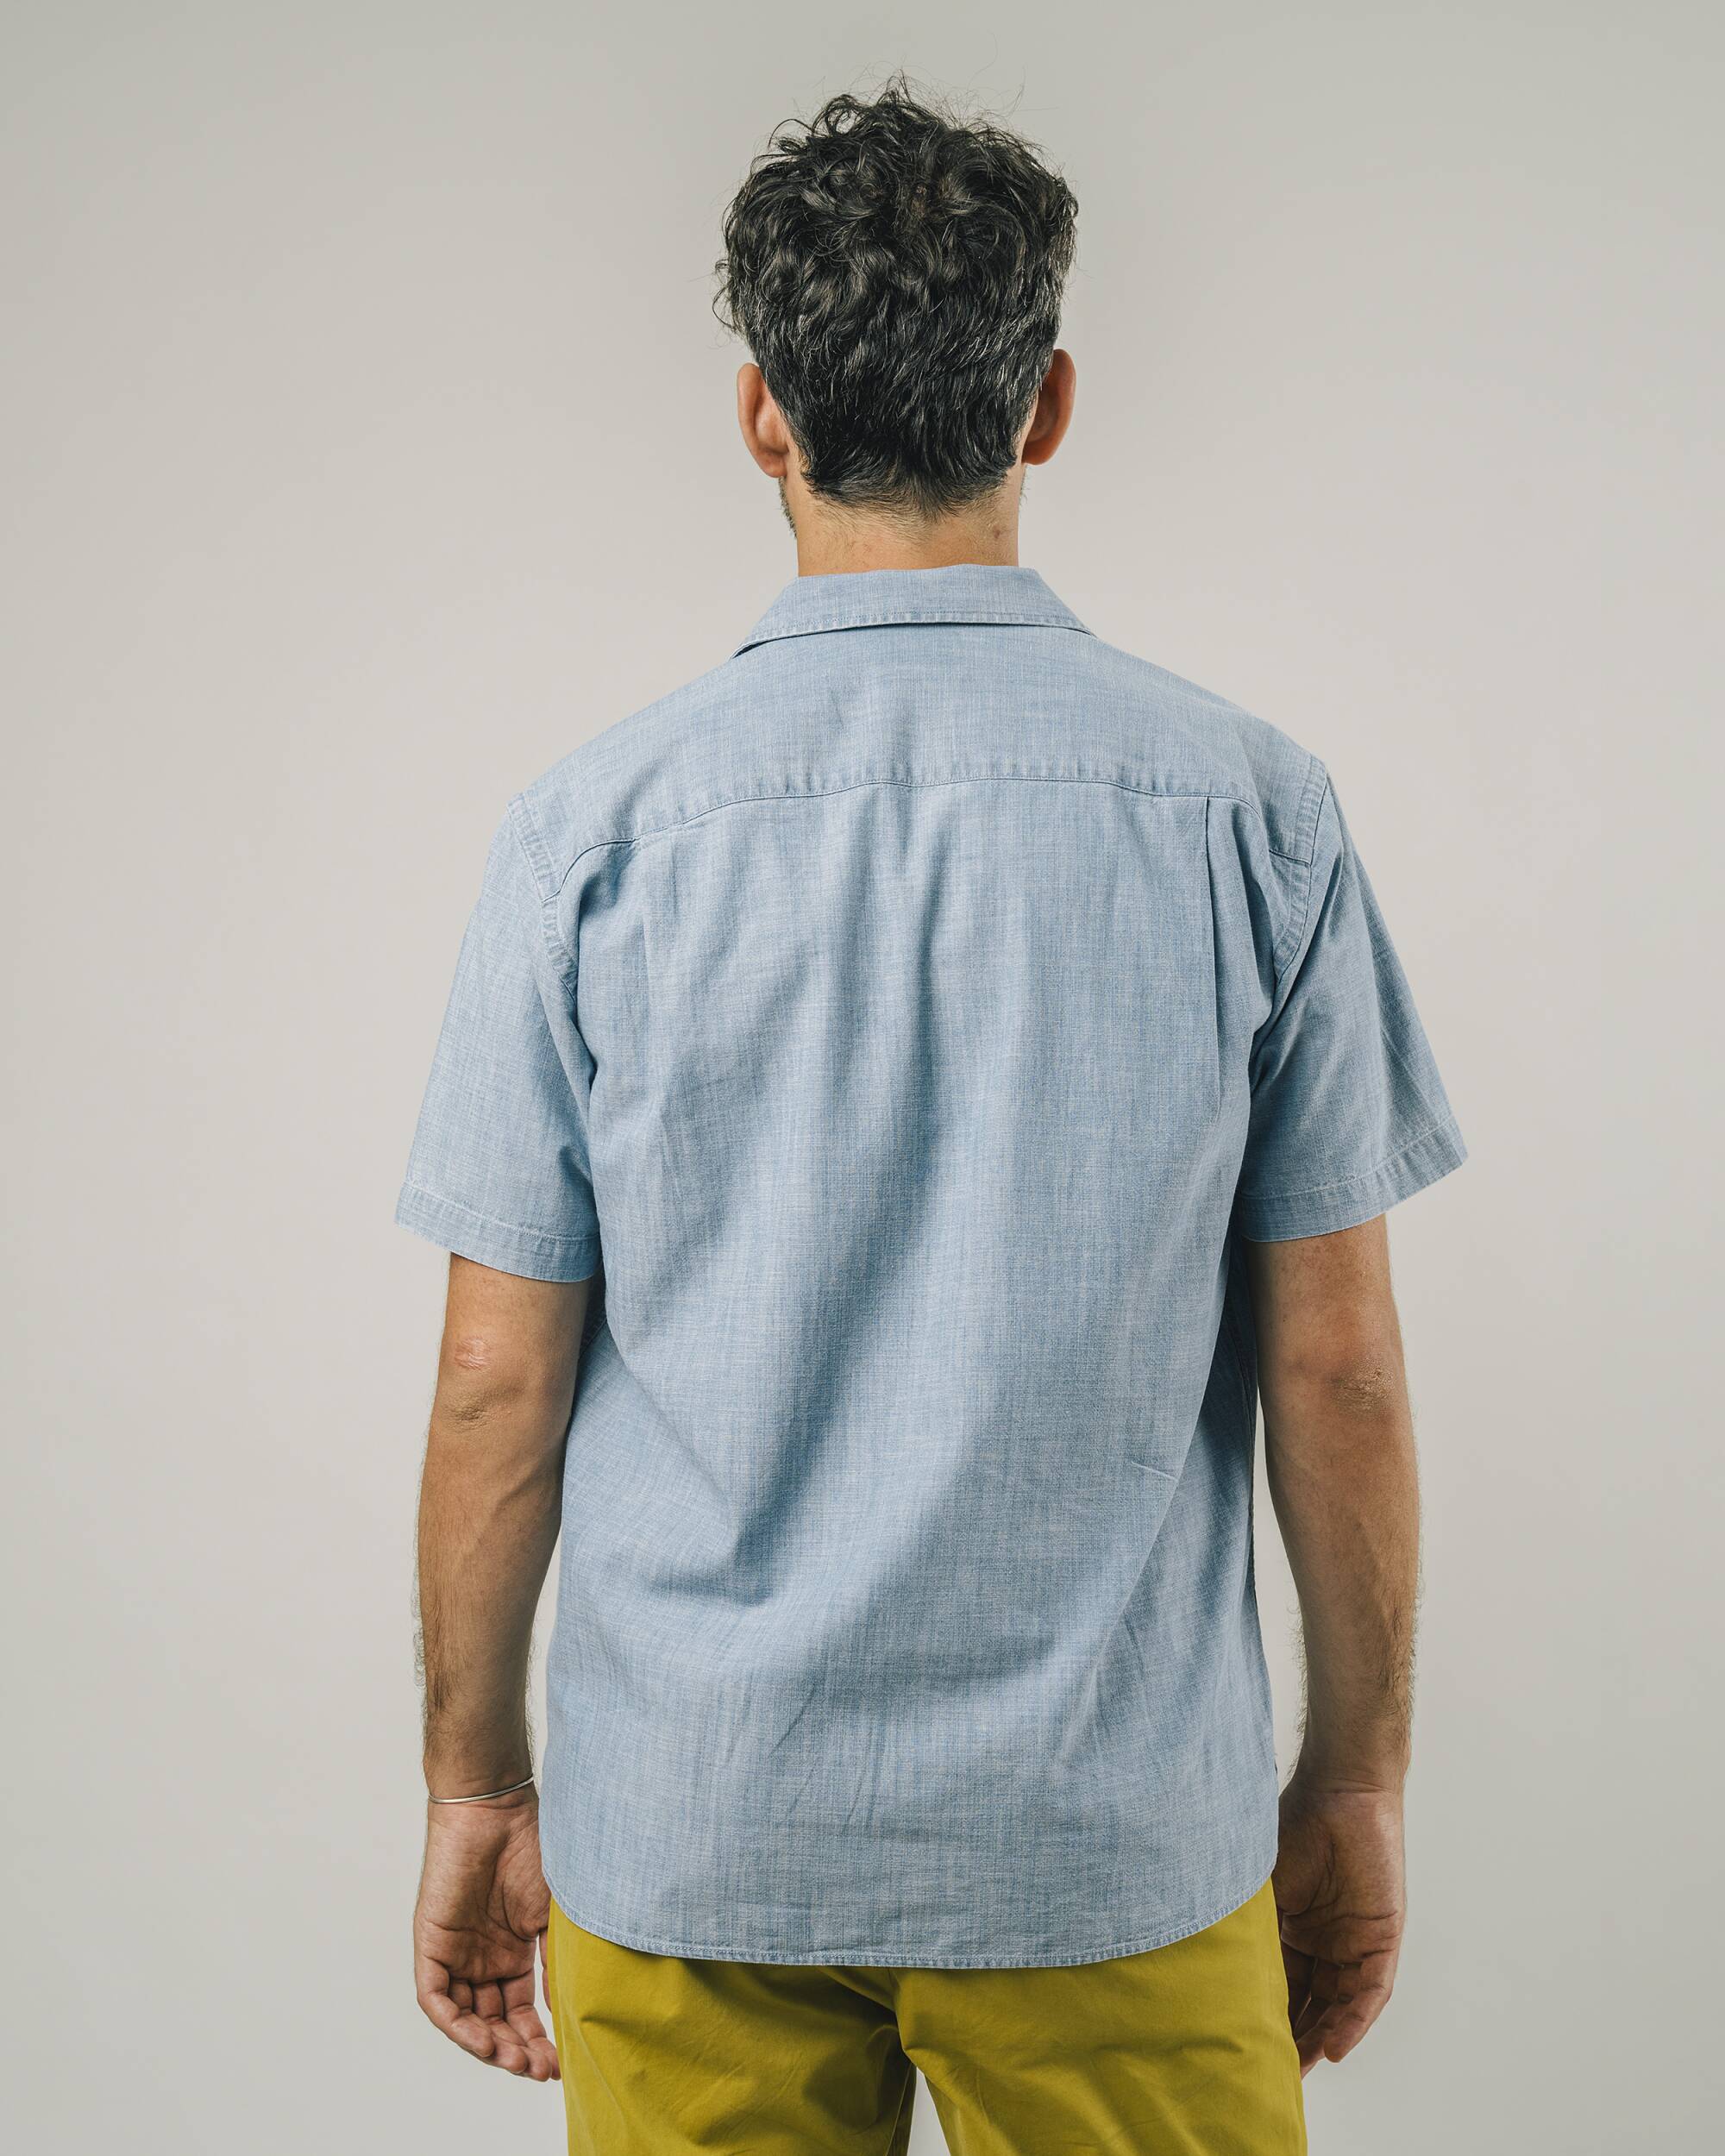 Brava Fabrics Samarretes de màniga curta Indigo Denim Aloha Shirt moda sostenible moda ètica